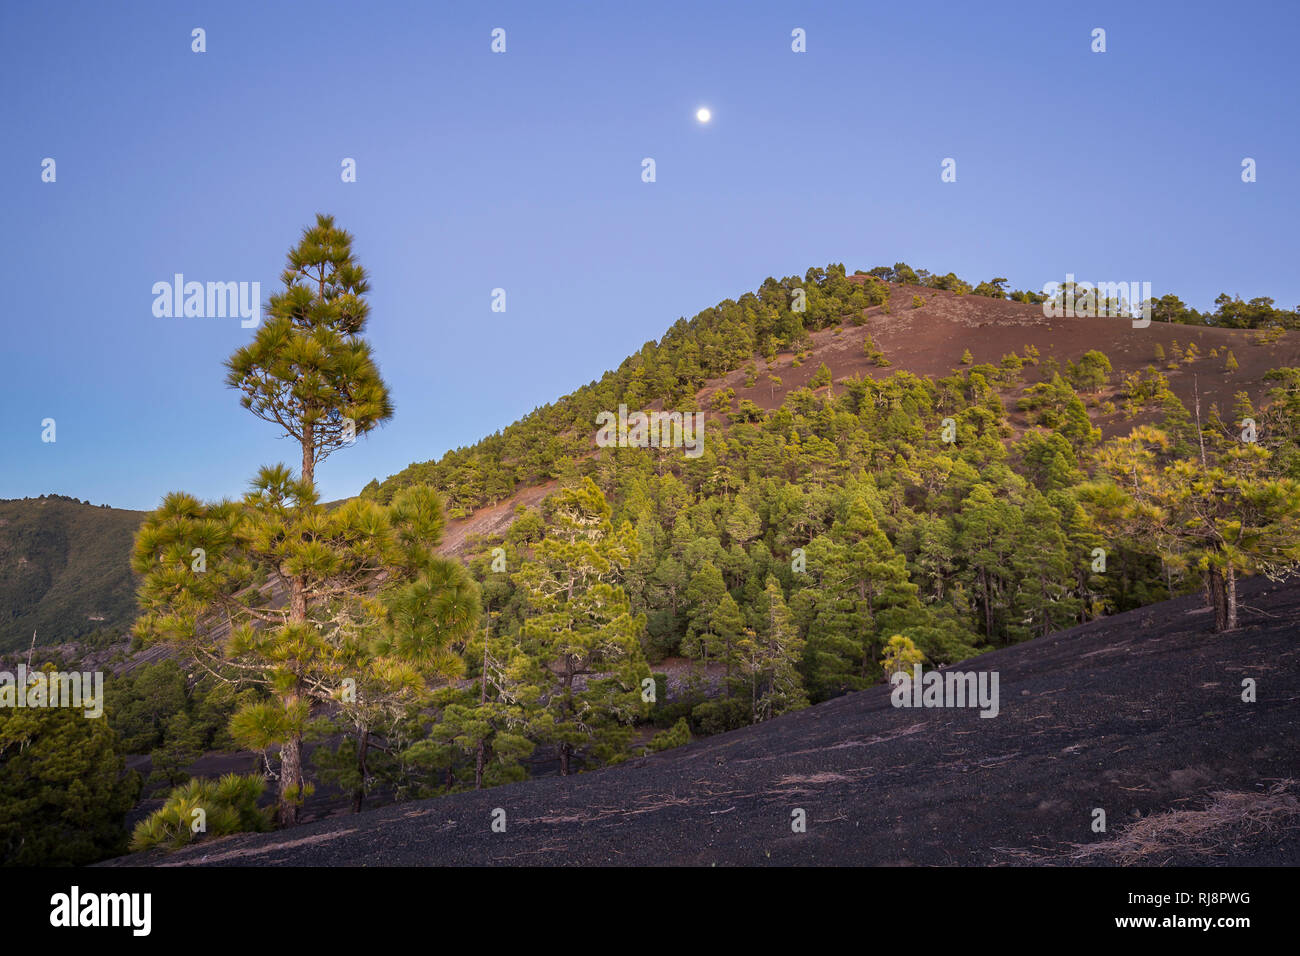 Vulkankegel Montaña Quemada (Tacande), Gebiet Llano del Jable, La Palma, Kanarische Inseln, Spanien, Abendaufnahme Stock Photo